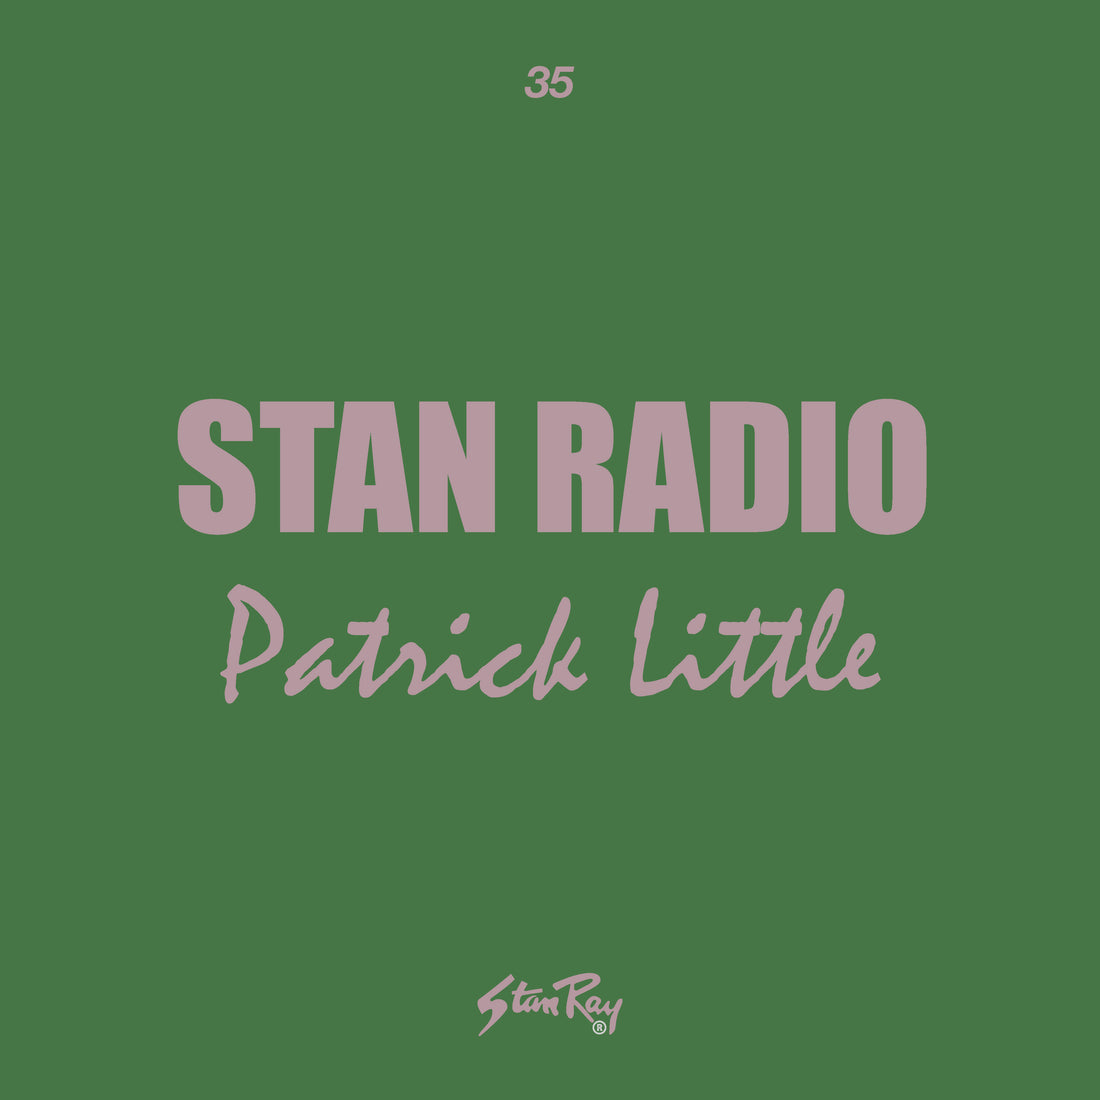 Stan Radio 35 by Patrick Little (Shari-Vari records)